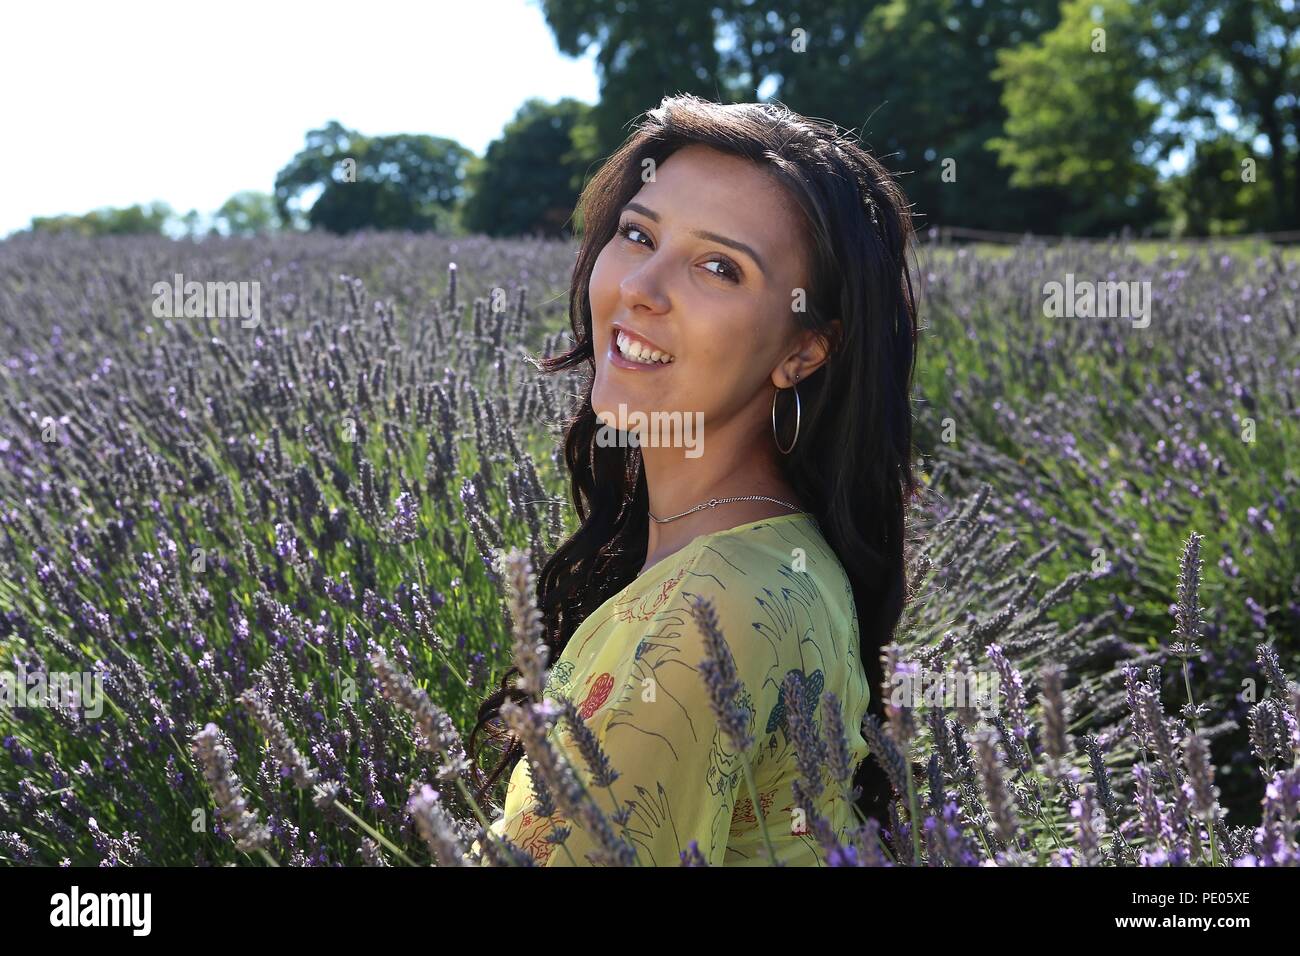 Spanish Beauty in Mayfield Lavender Field 2018 Stock Photo